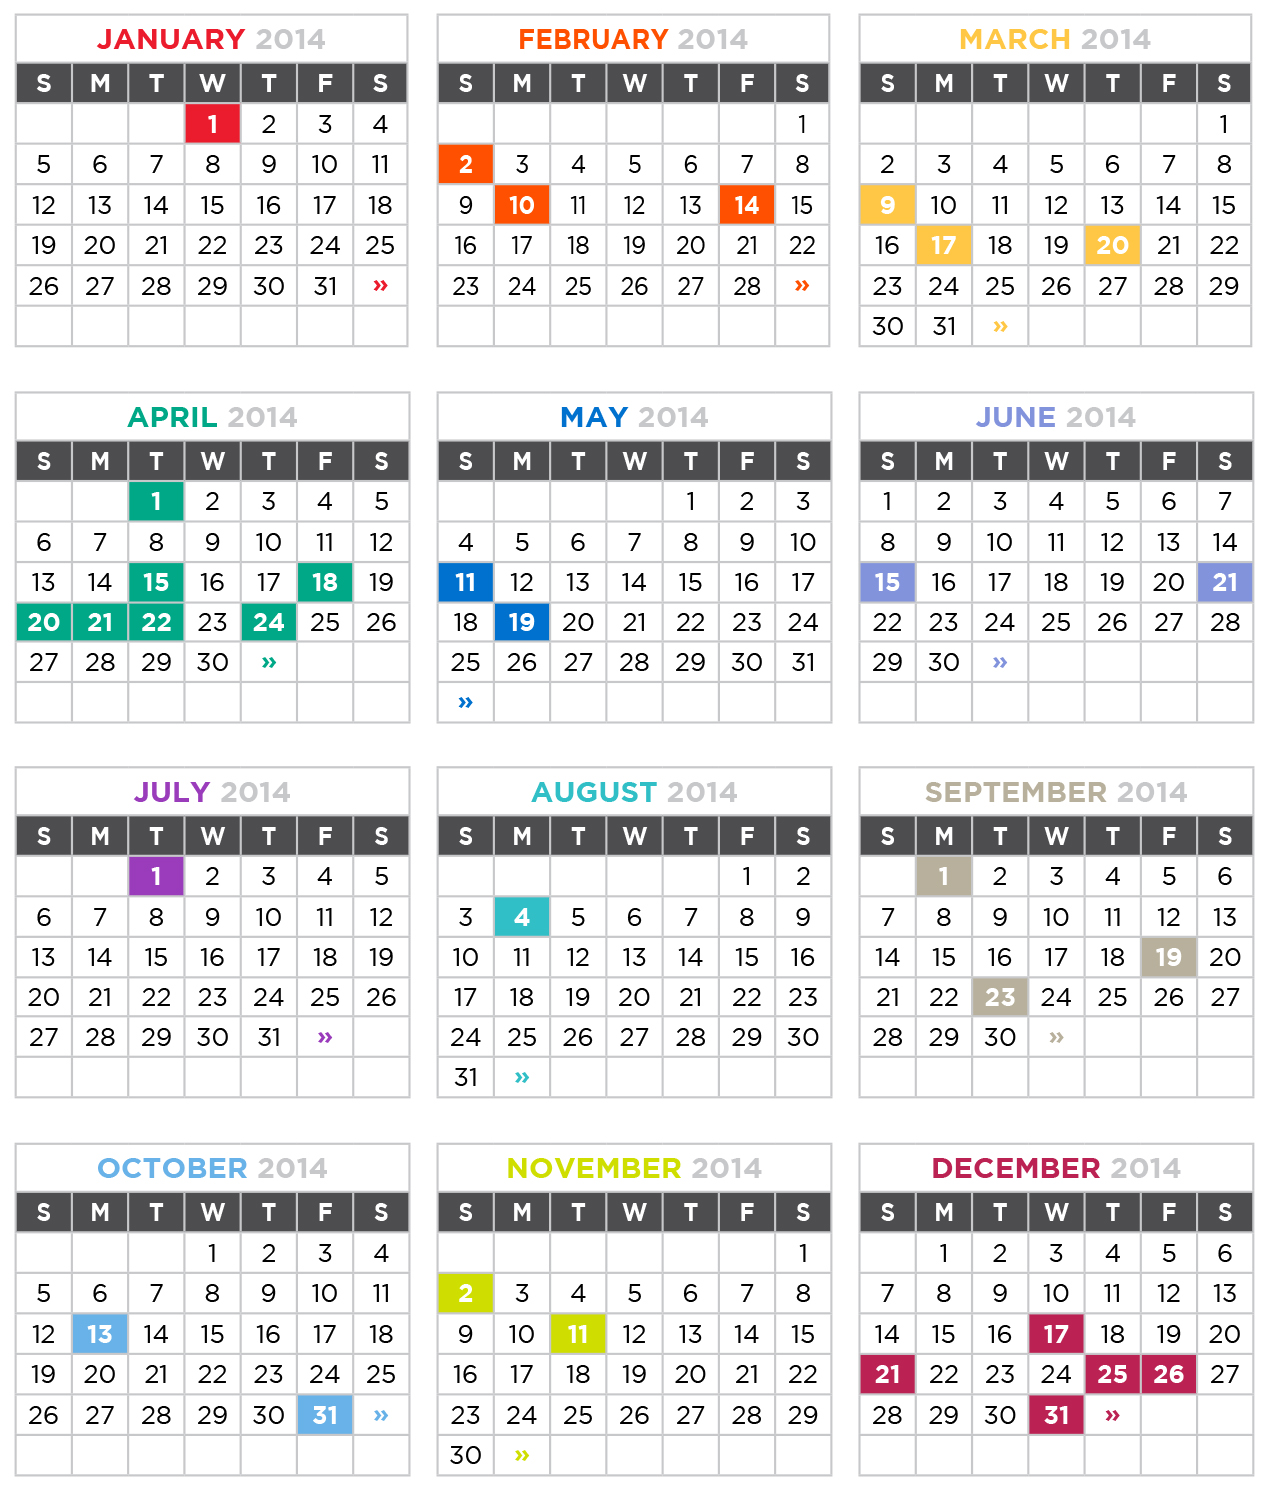 FM_Calendar2014-14.jpg